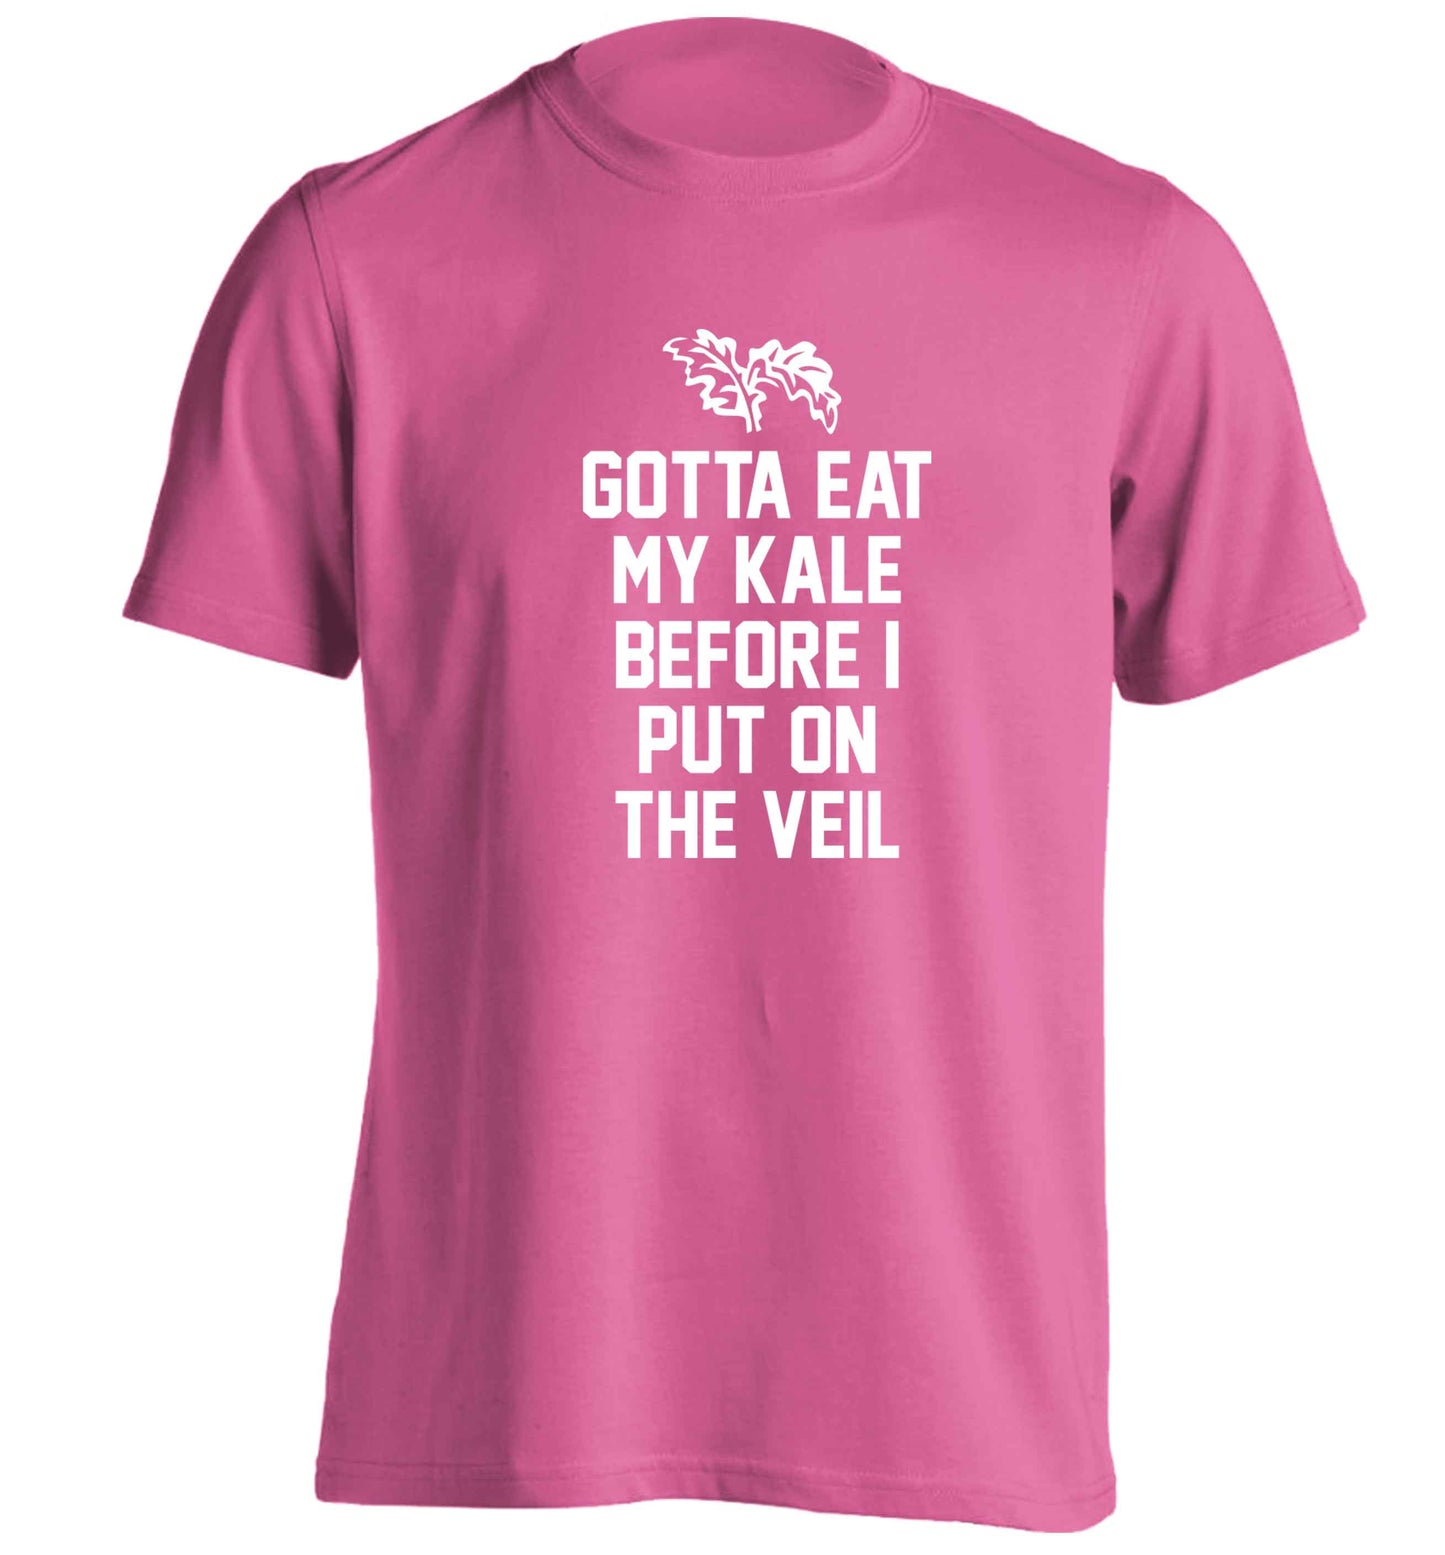 Gotta eat my kale before I put on the veil adults unisex pink Tshirt 2XL